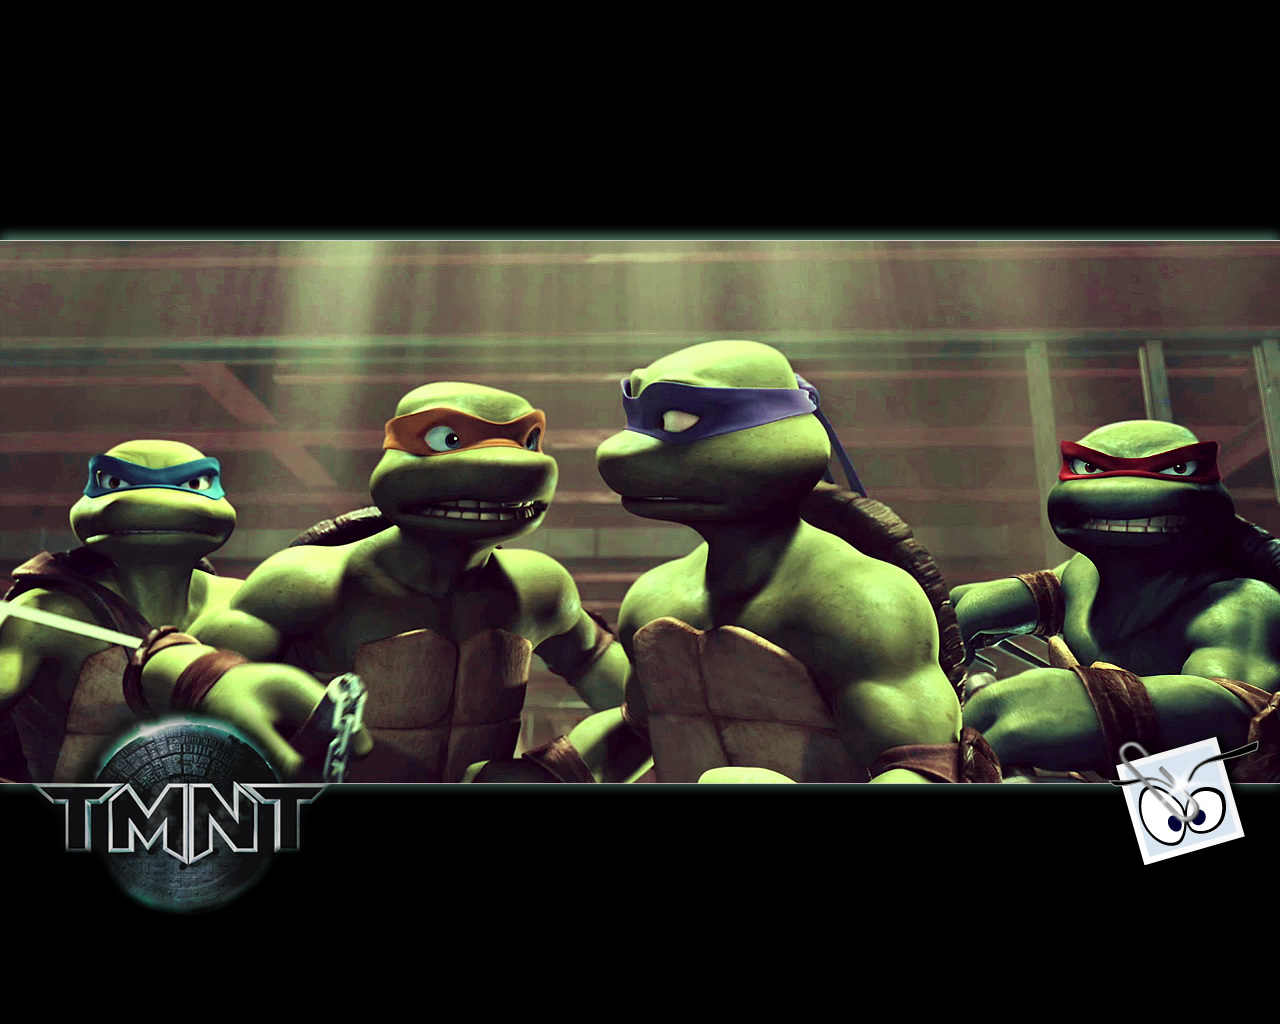 download wallpaper: Teenage Mutant Ninja Turtles wallpaper